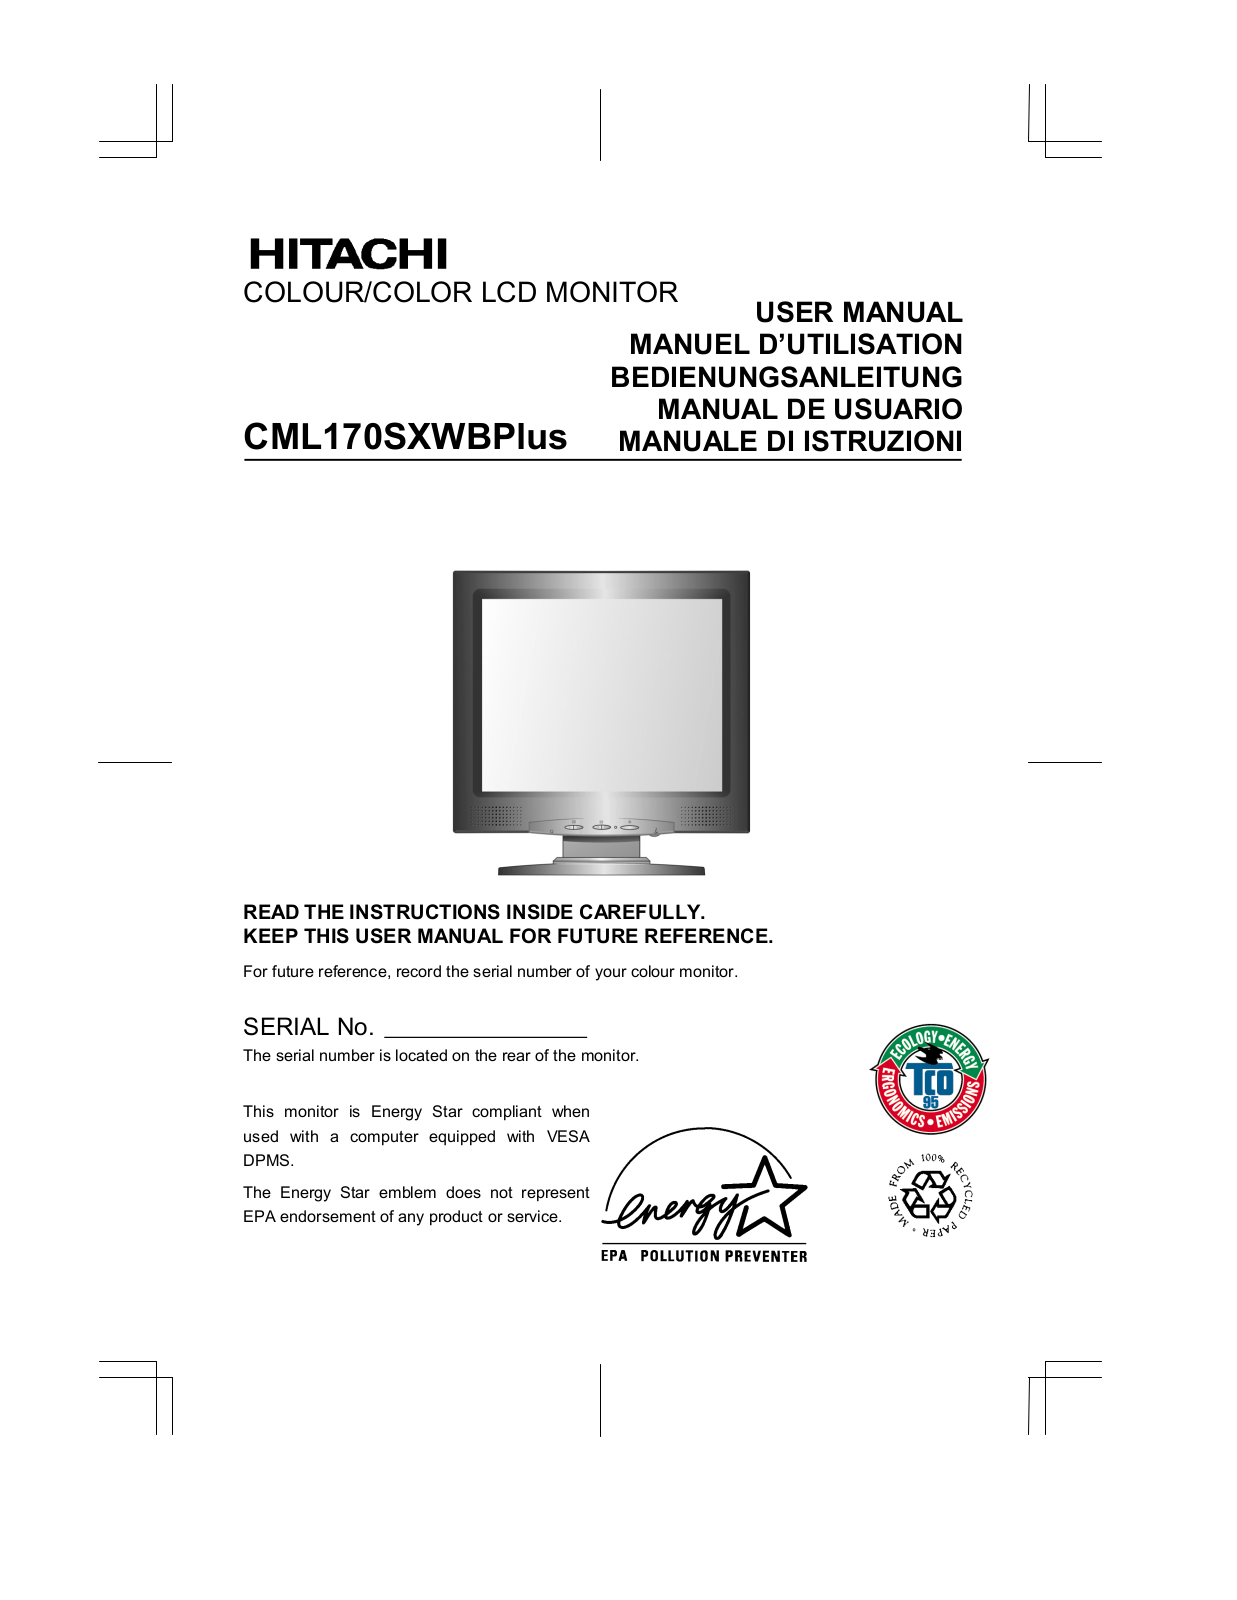 Hitachi CML170SXWB PLUS User Manual